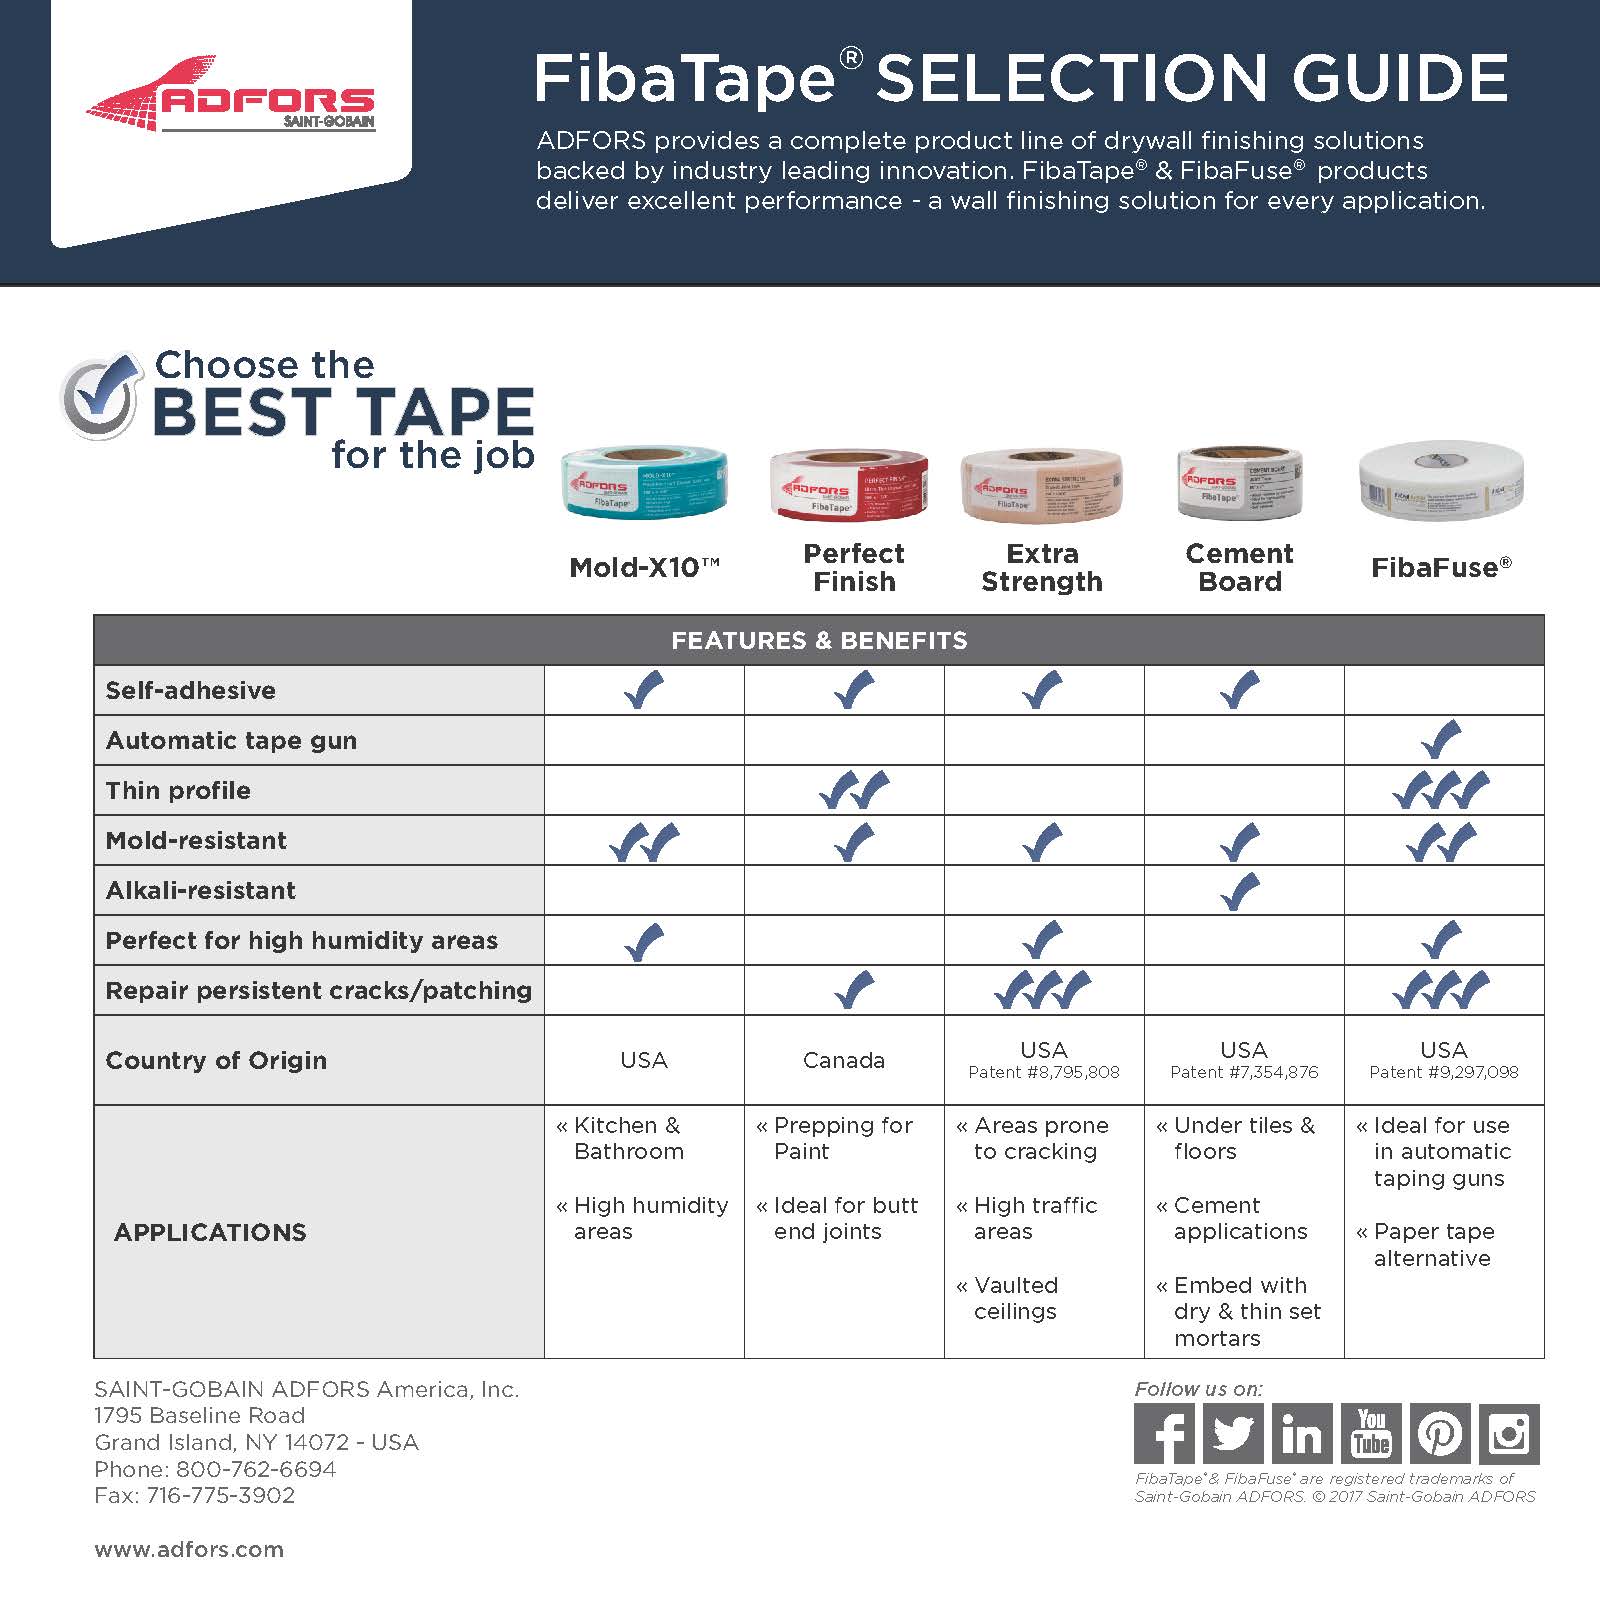 FibaTape Fdw8666-u 2-3/8 x 250' Extra Strength Drywall Tape